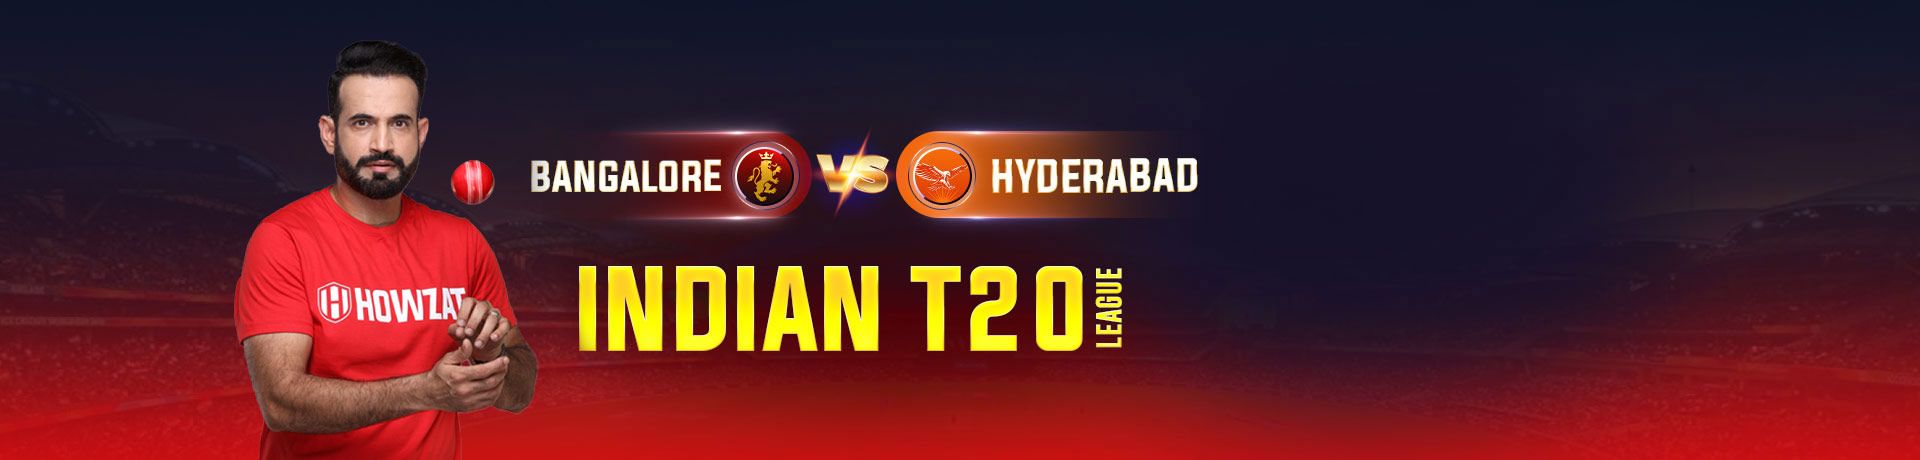 Bangalore vs Hyderabad Indian T20 League